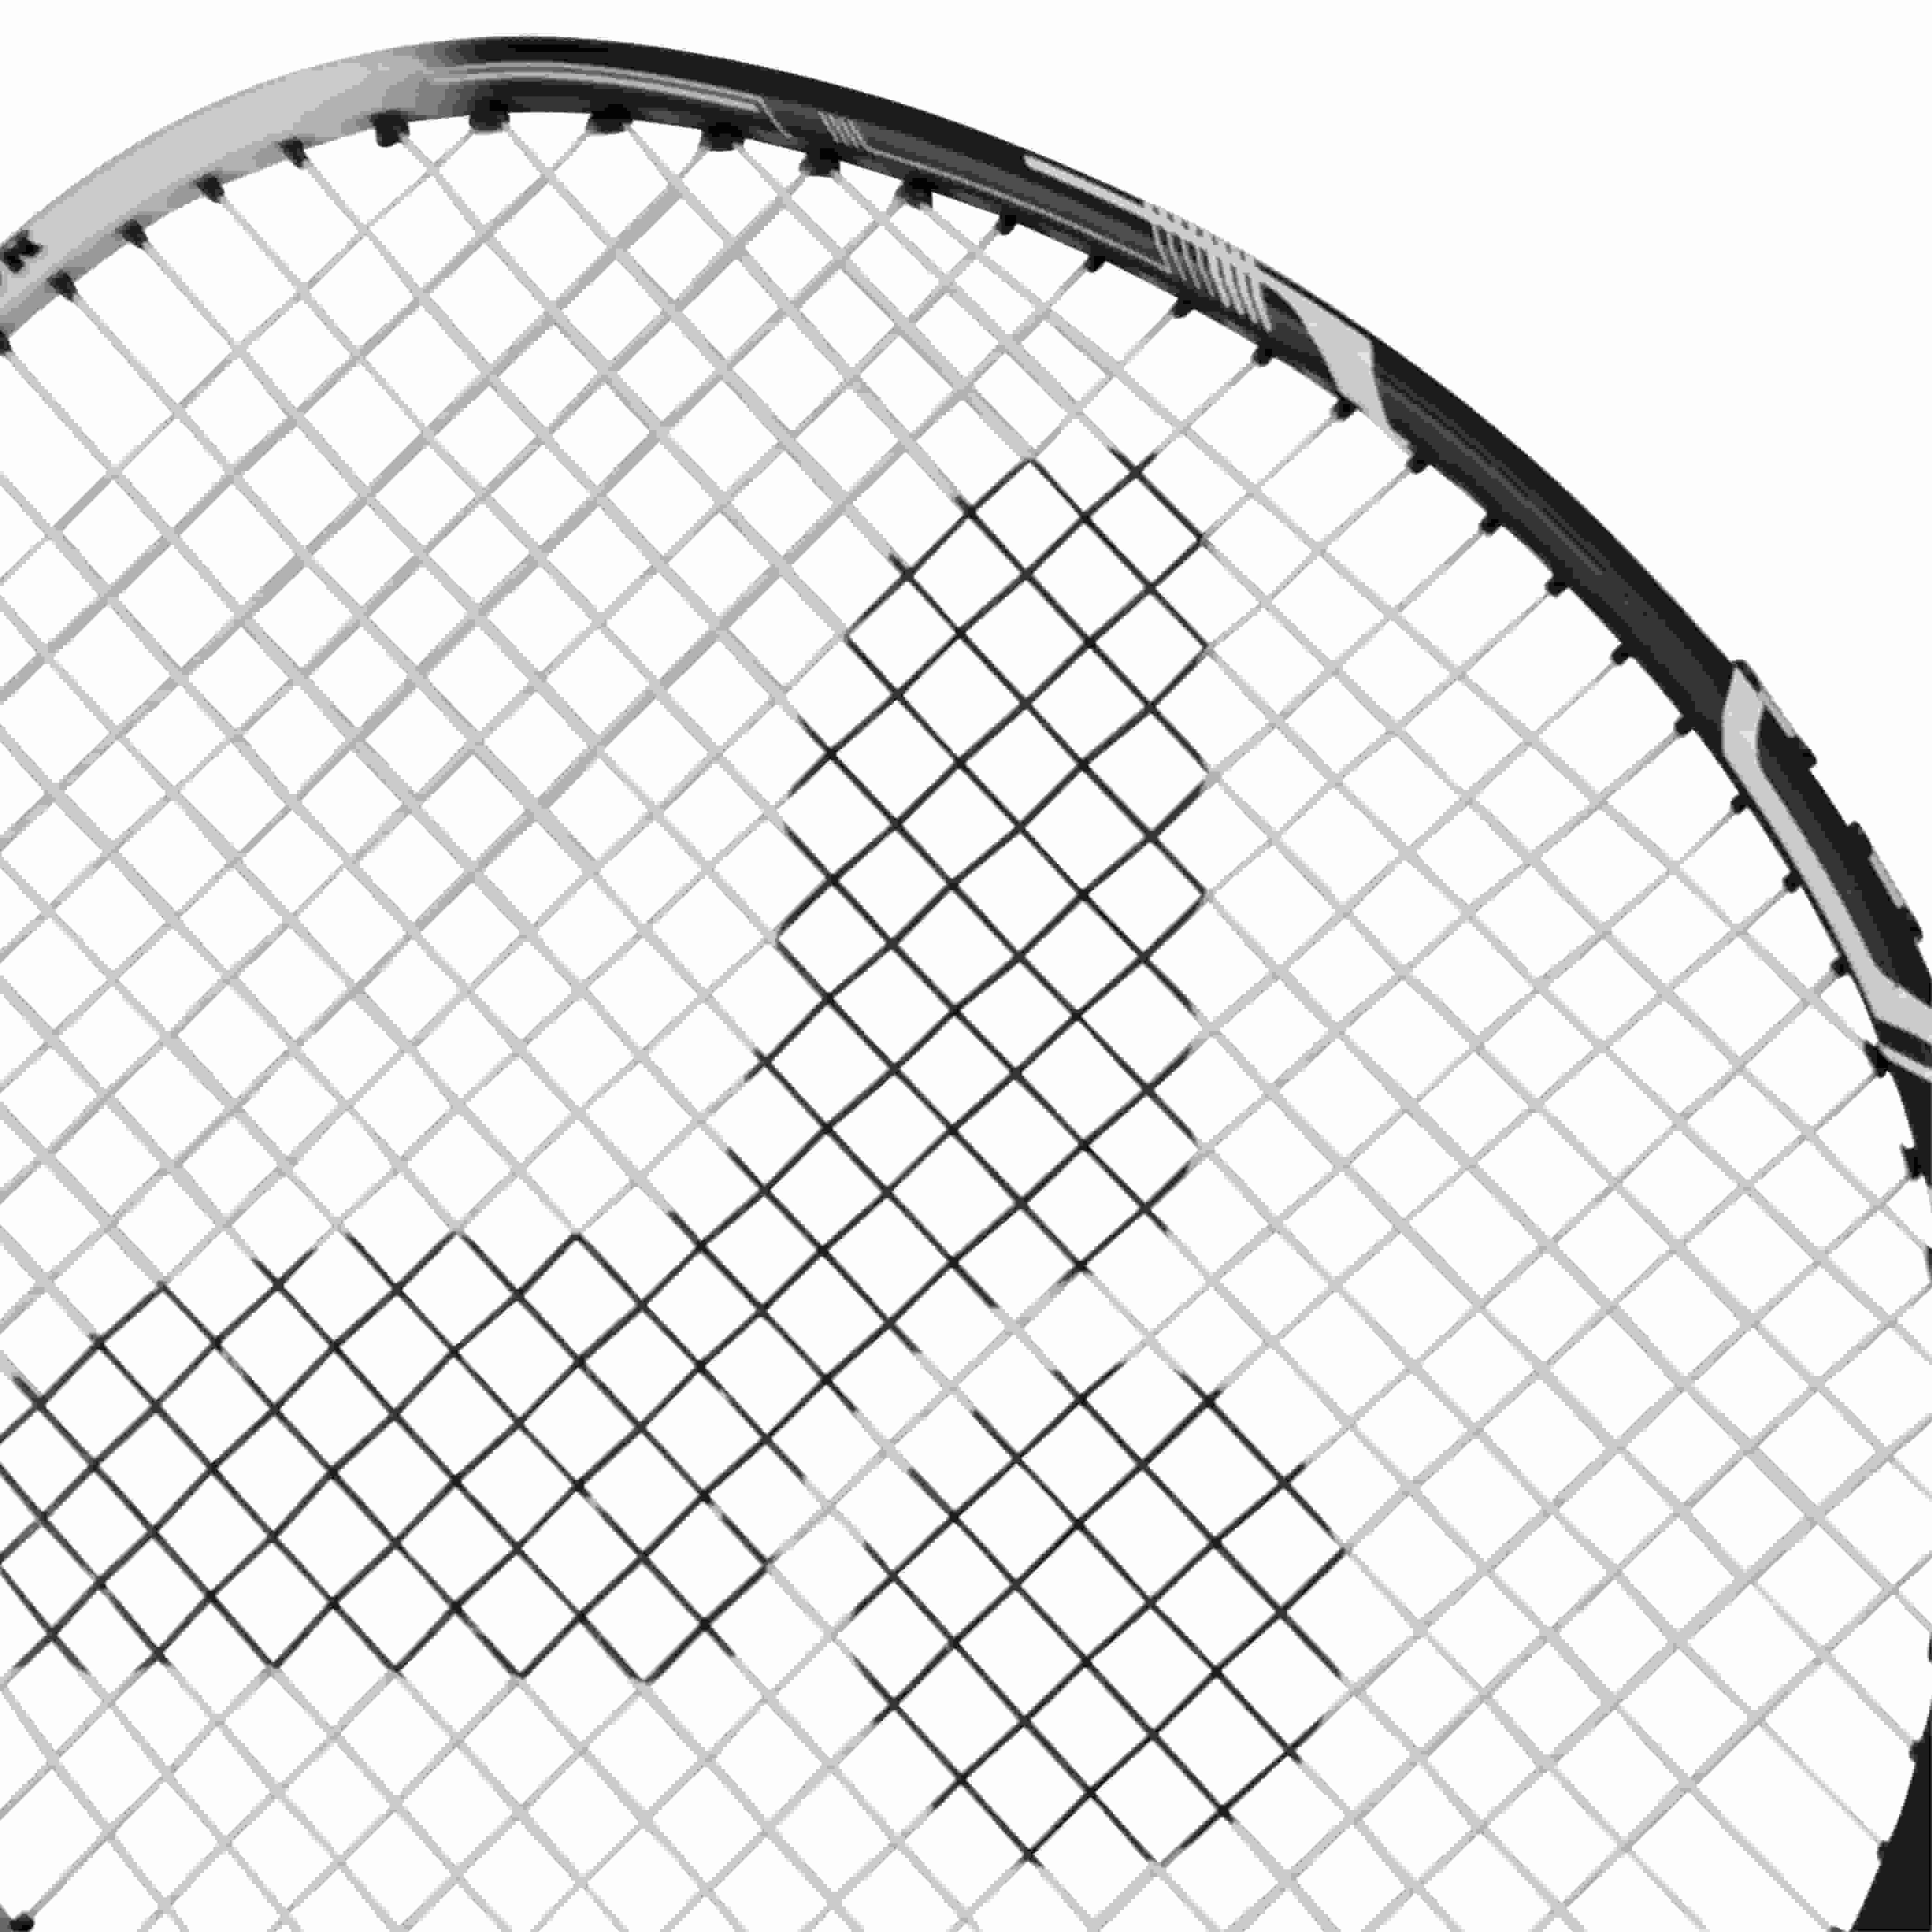 VICTOR Ultramate 8 Badmintonschläger - Besaitet